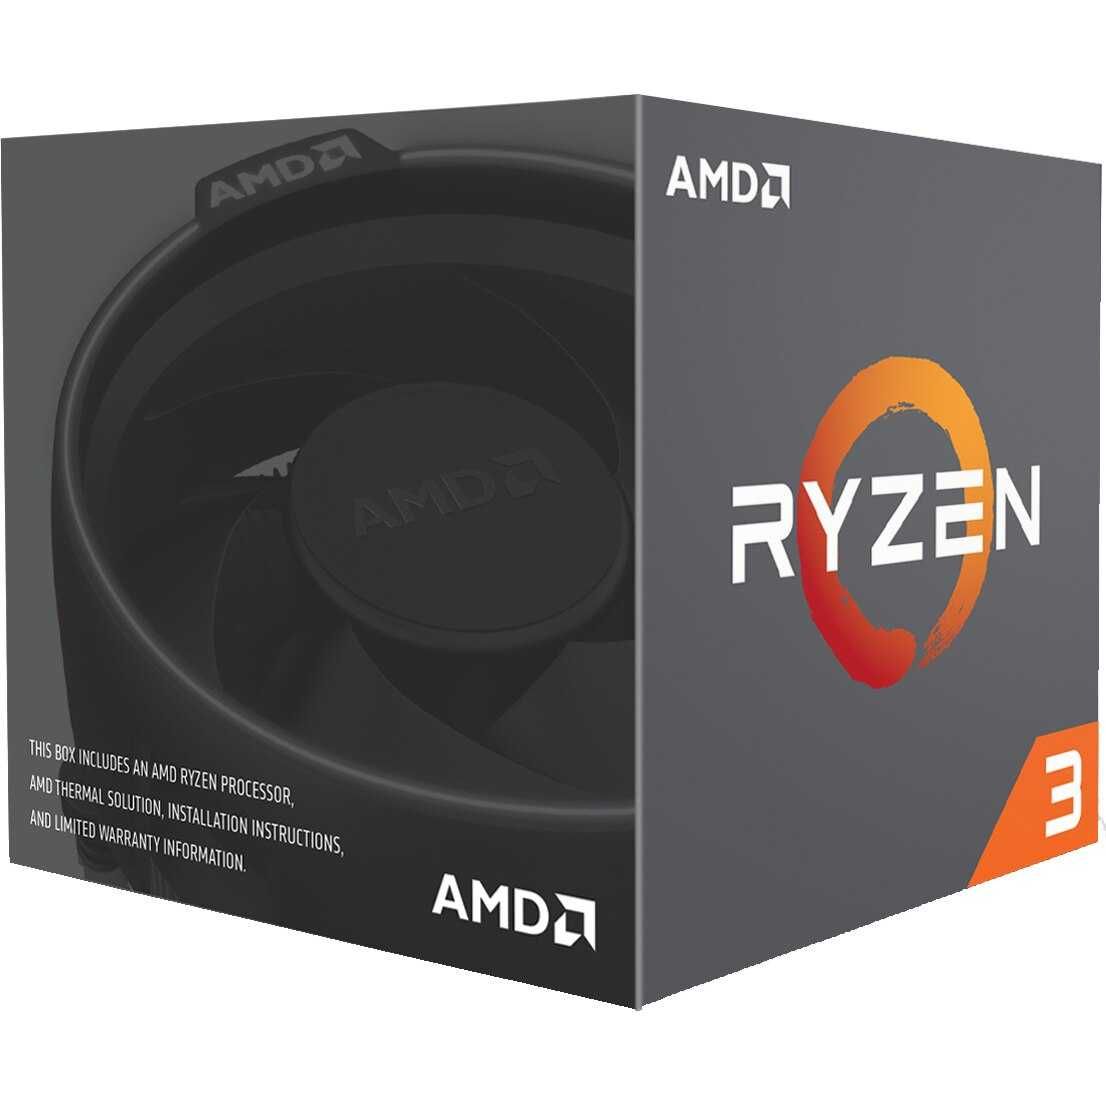 Procesor AMD RYZEN 3 1200, 3100MHz, 10MB, socket AM4, Box